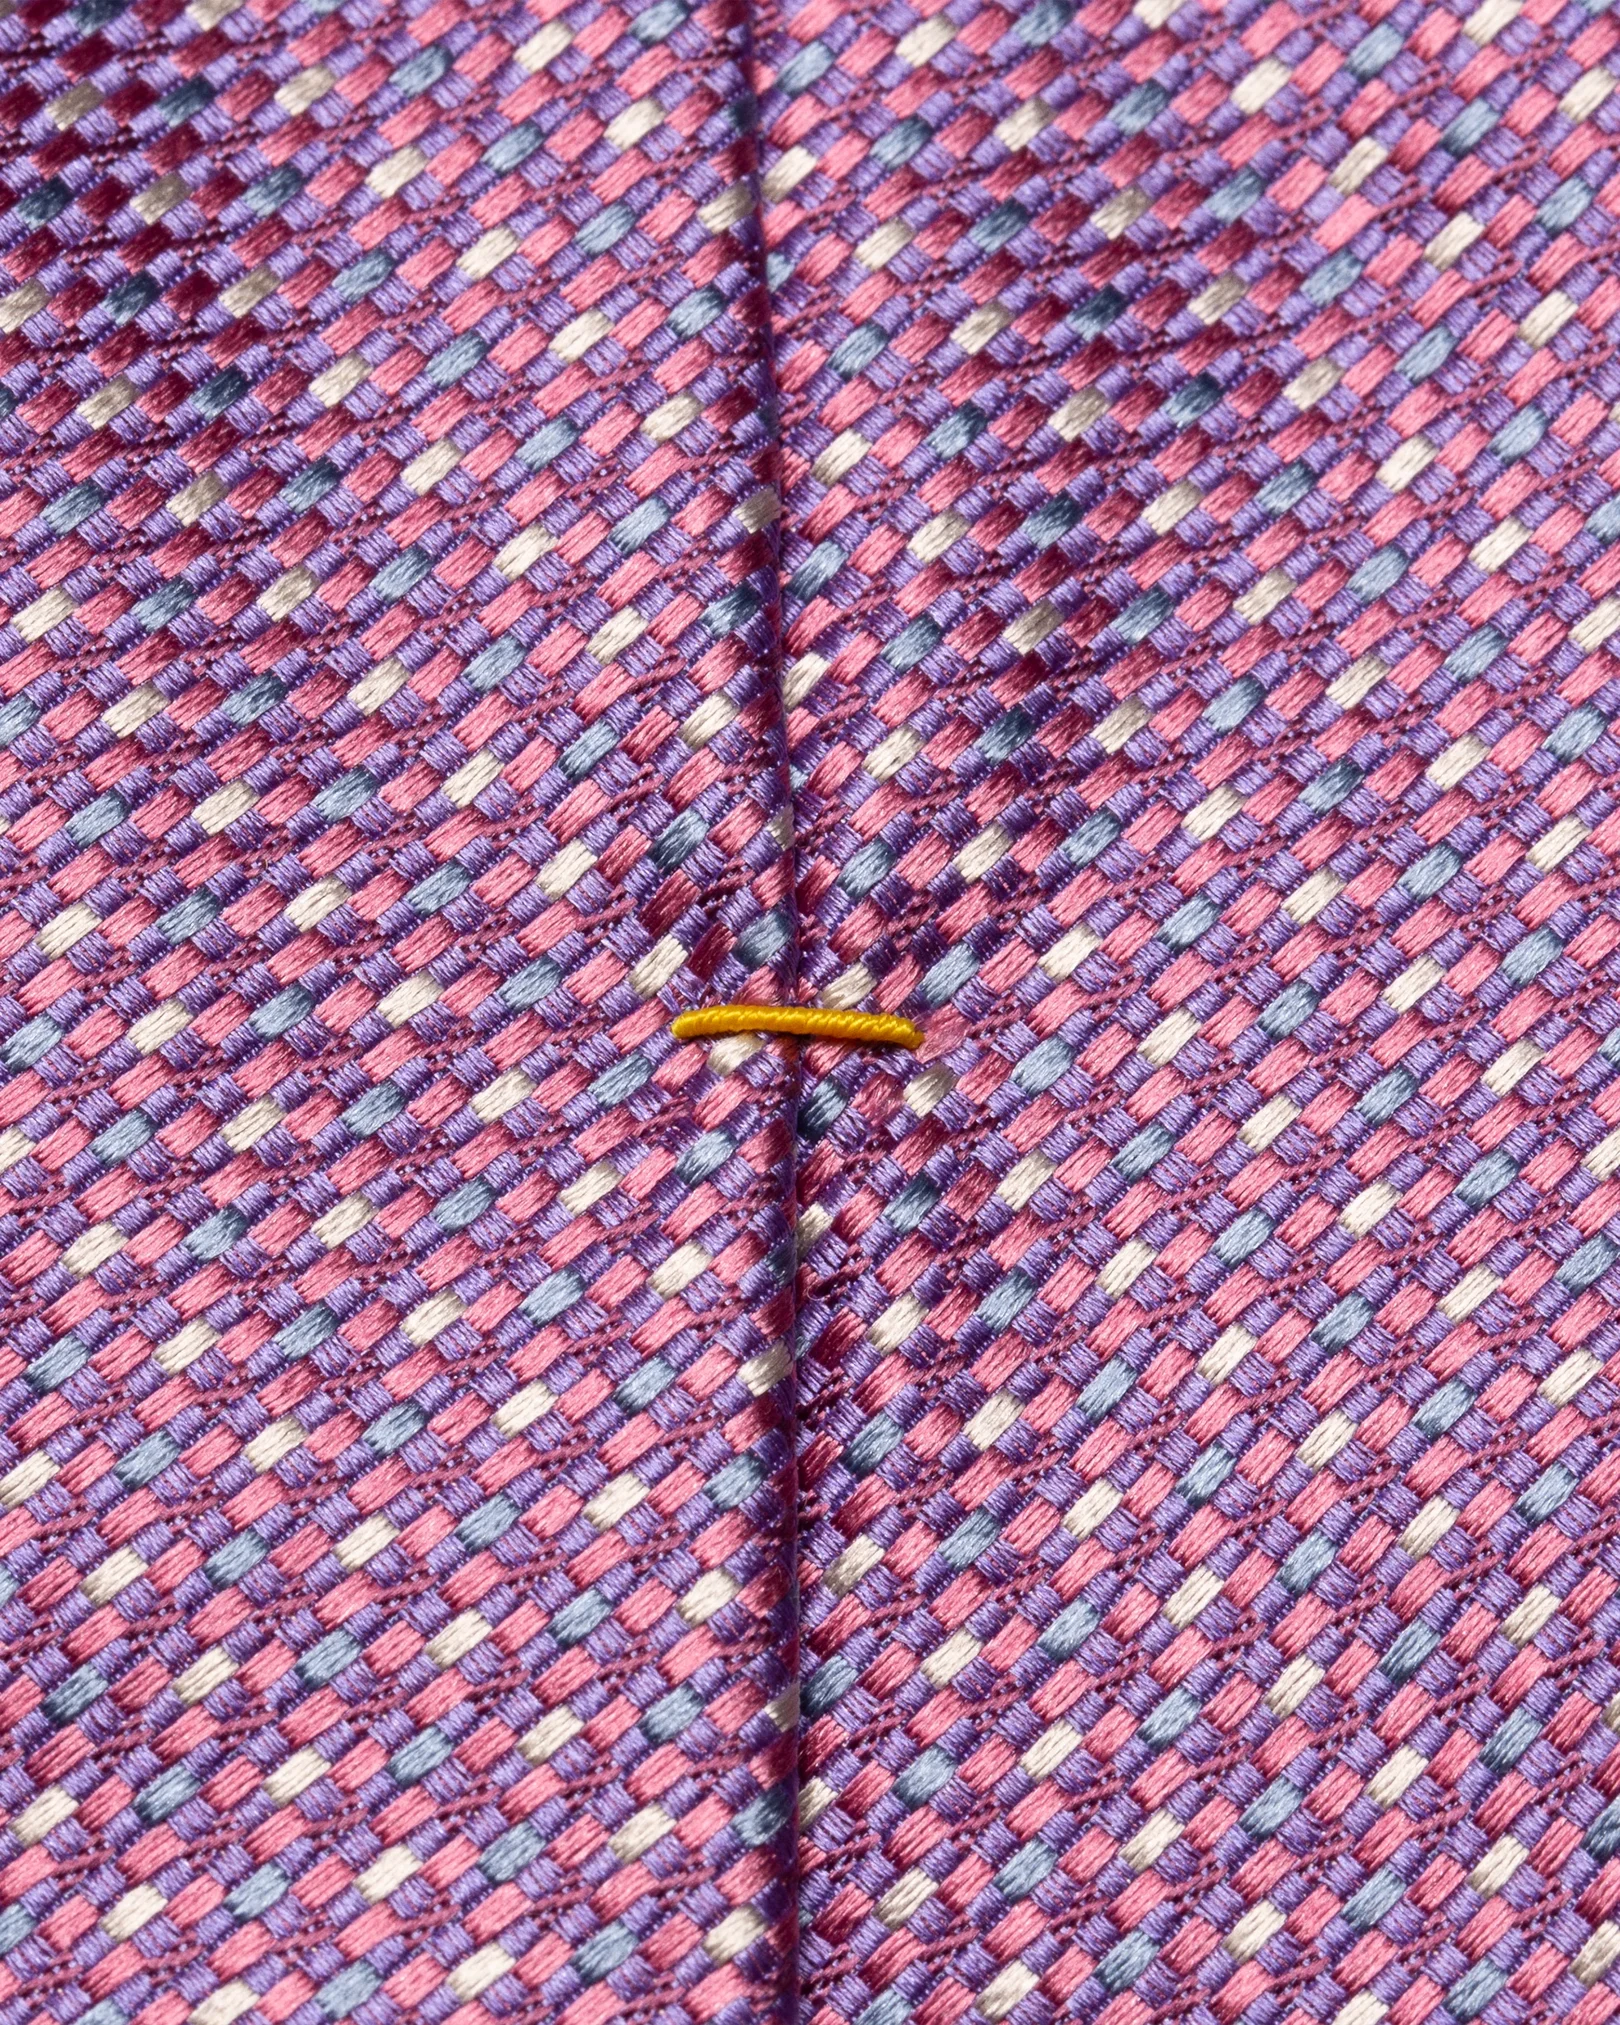 Eton - dark purple multi colored tie